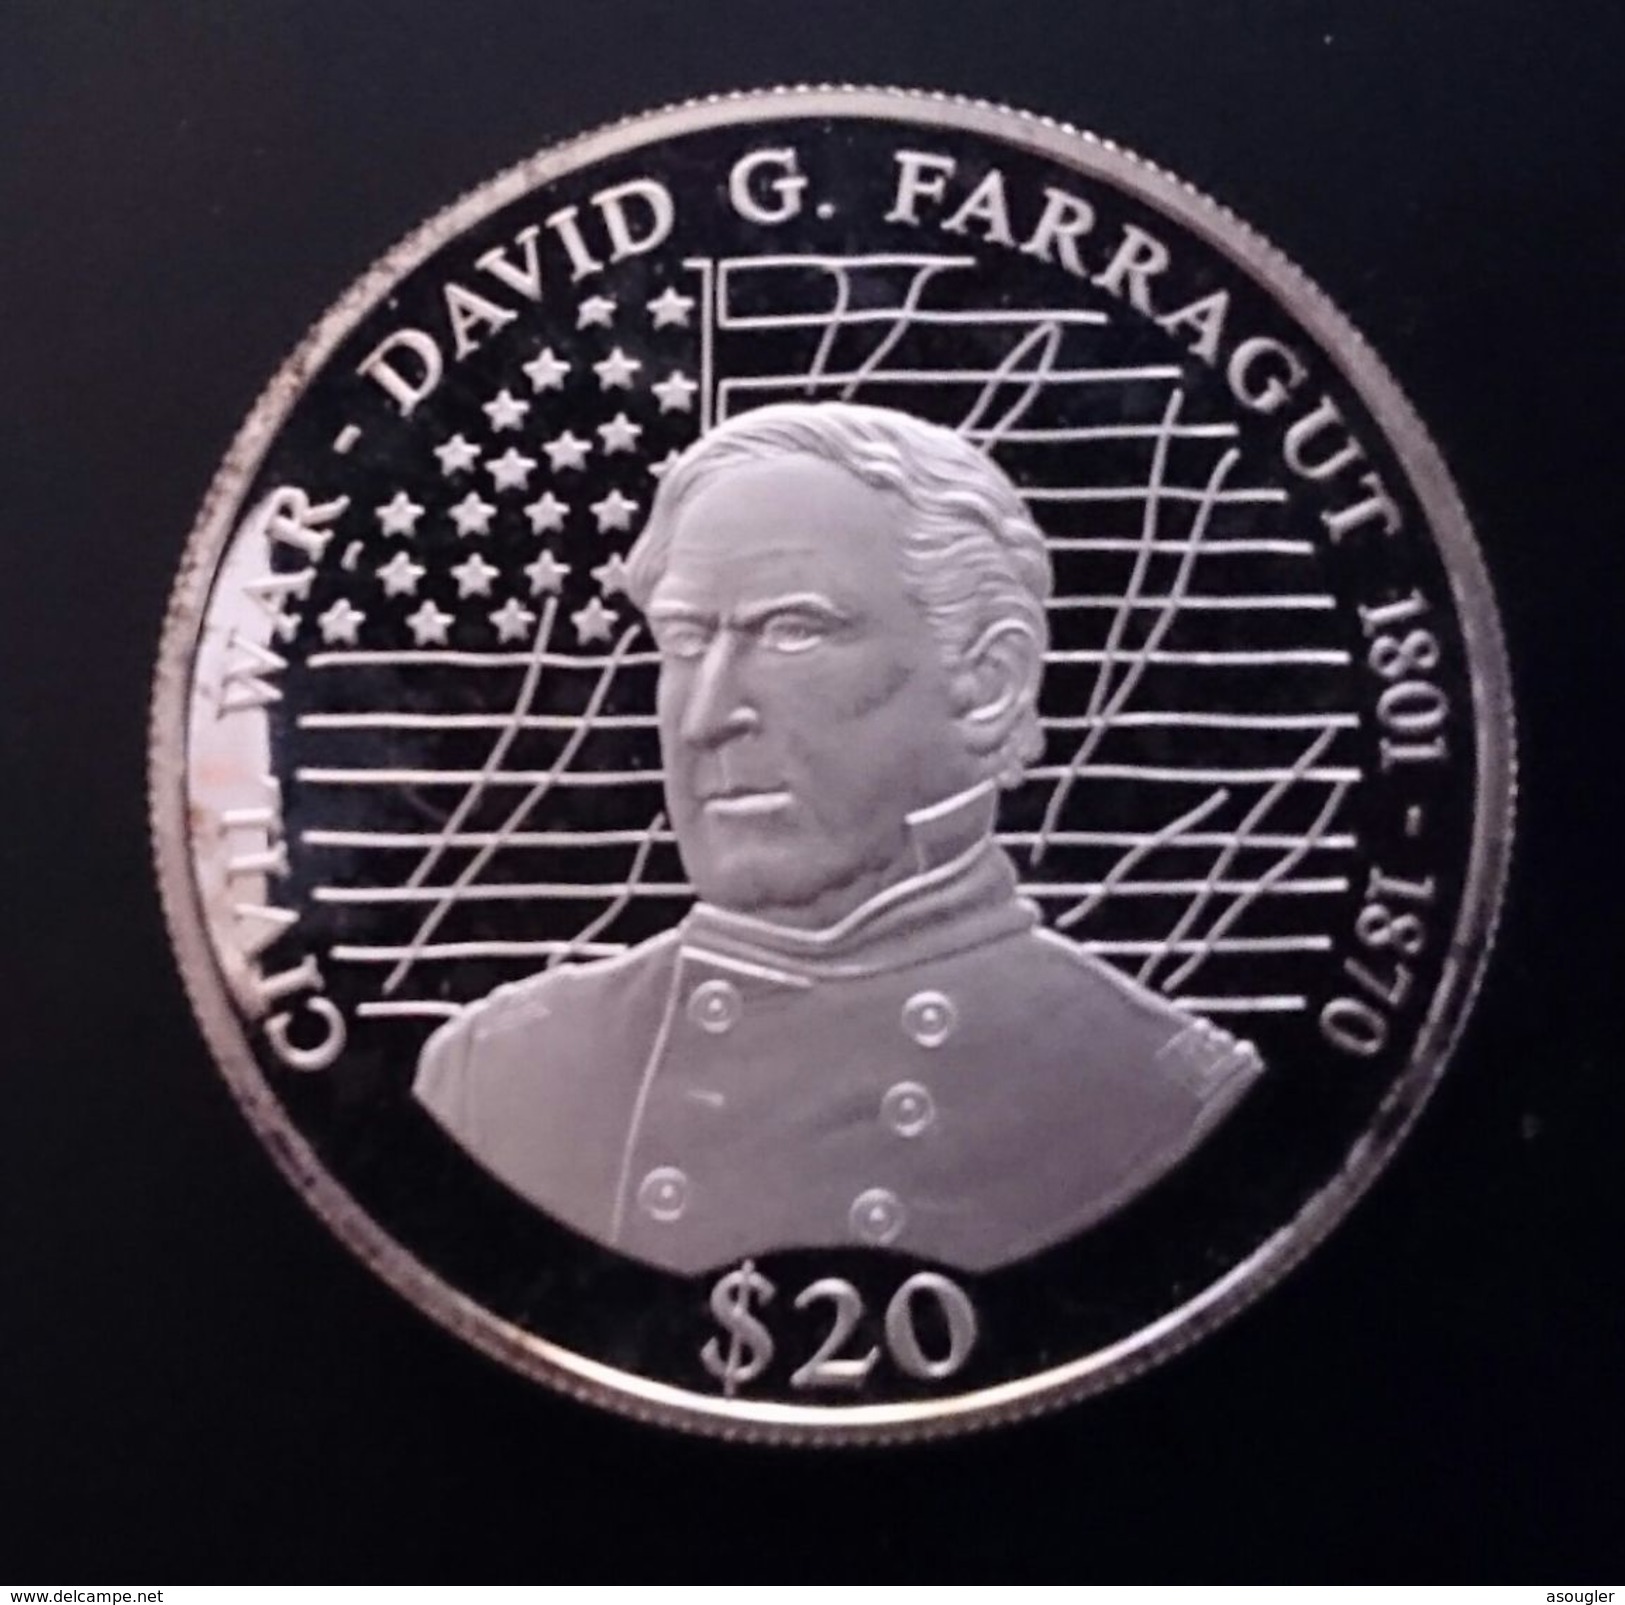 LIBERIA 20 DOLLARS 2000 SILVER PROOF "Admiral David G. Farragut" Free Shipping Via Registered Air Mail - Liberia